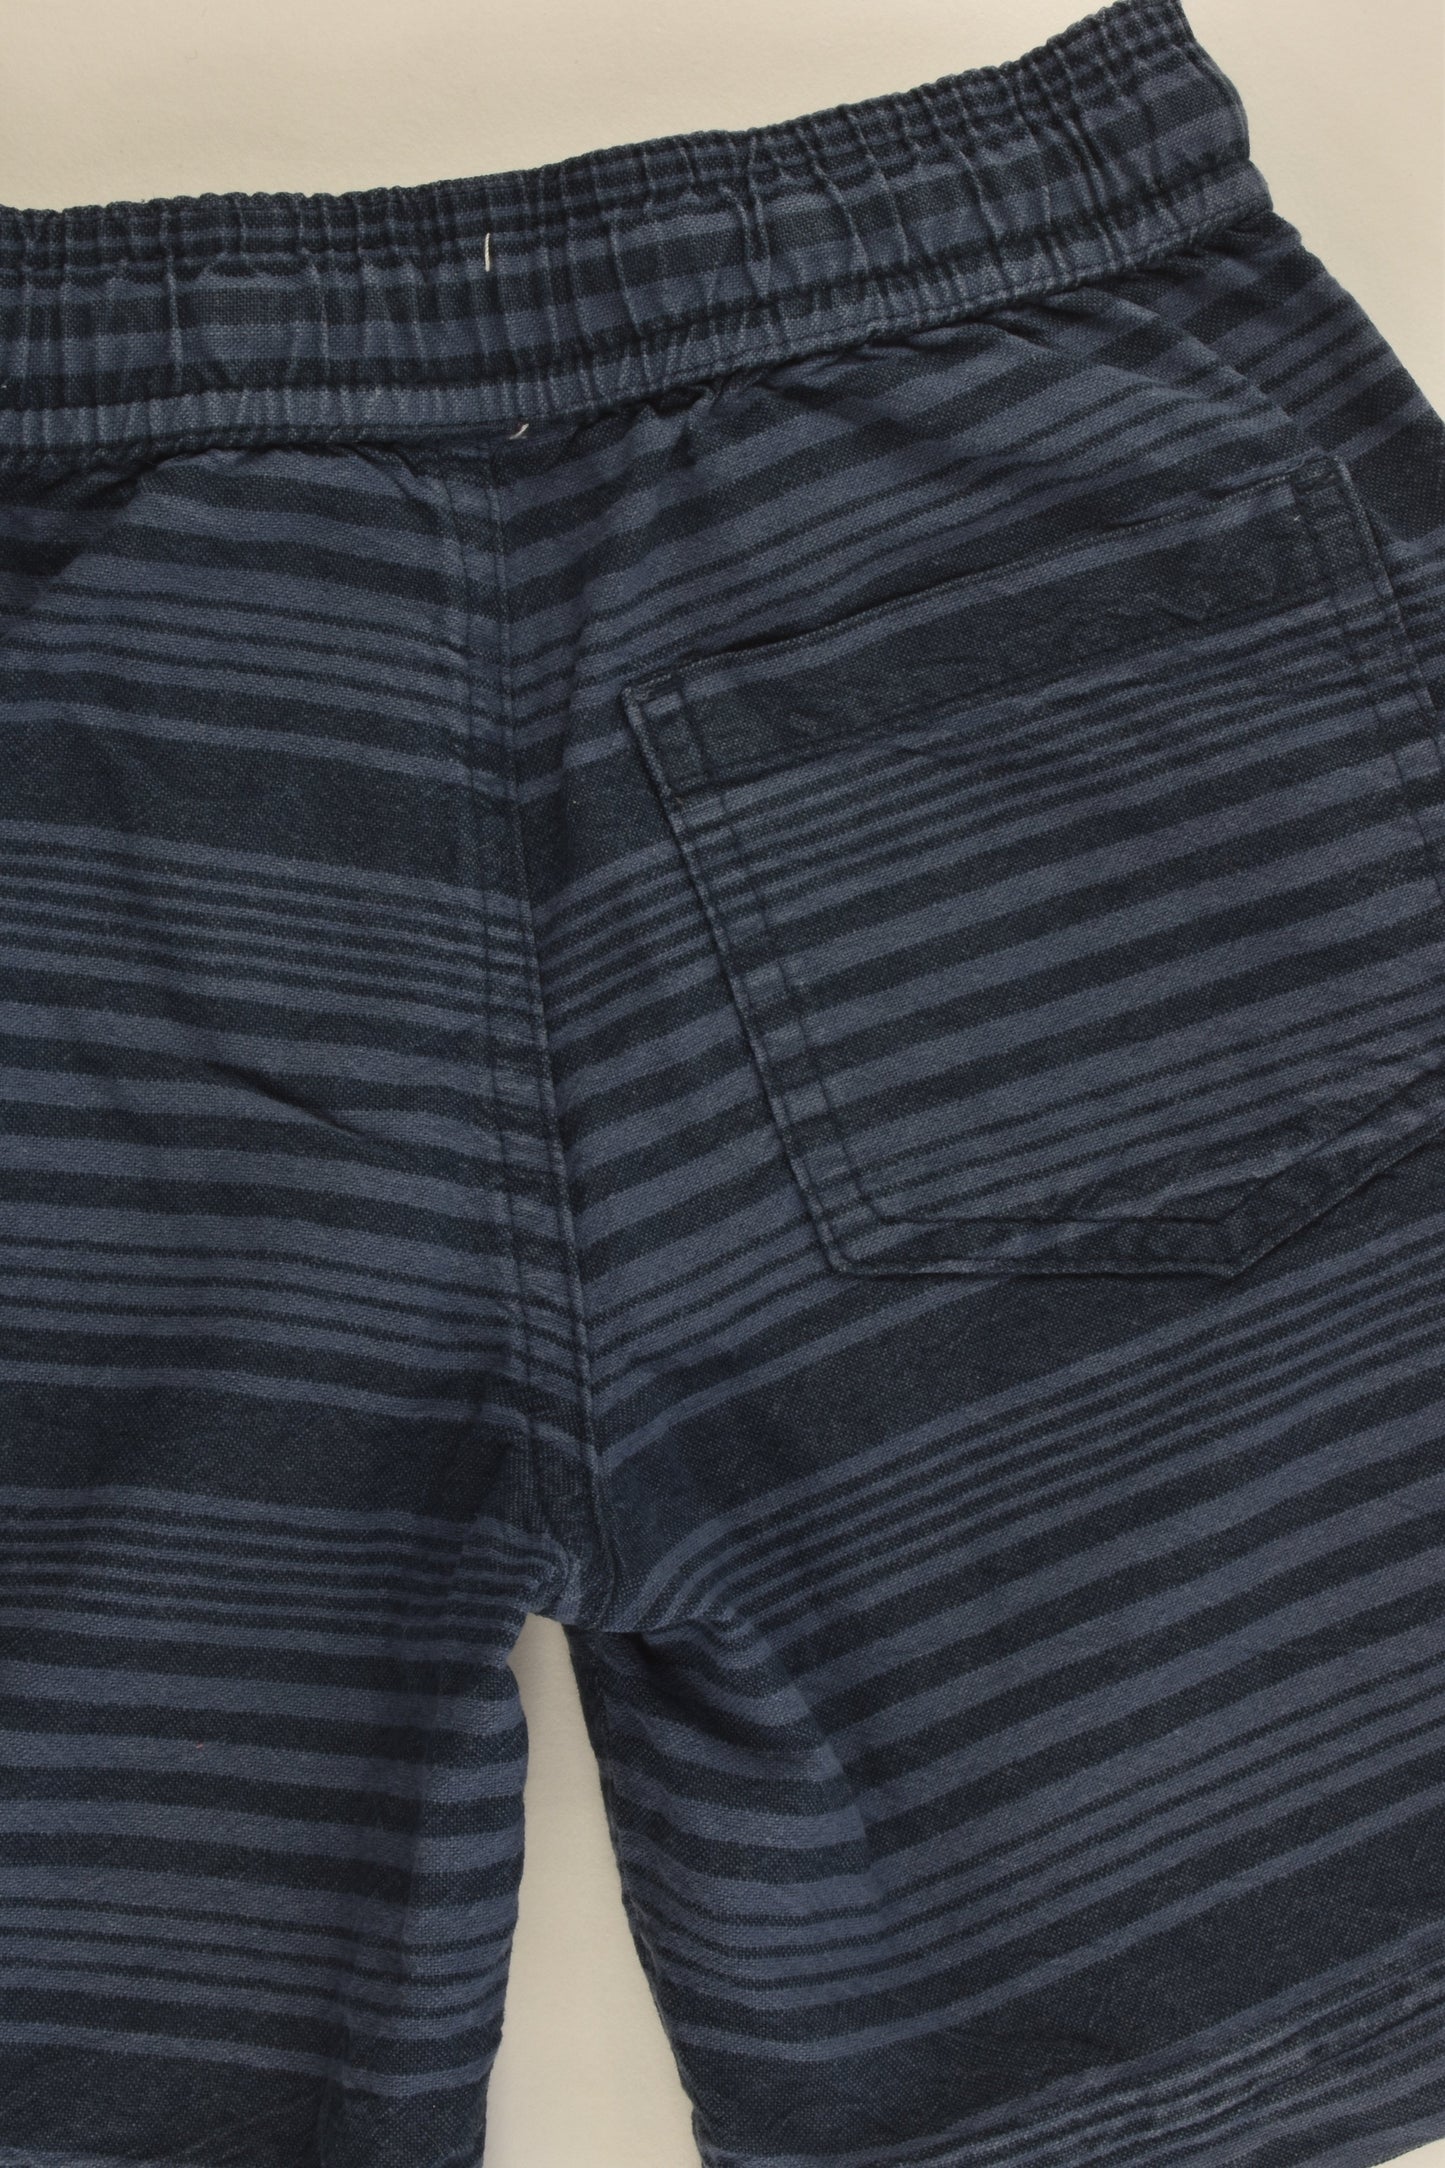 H&T Size 5 Linen-Feel Shorts